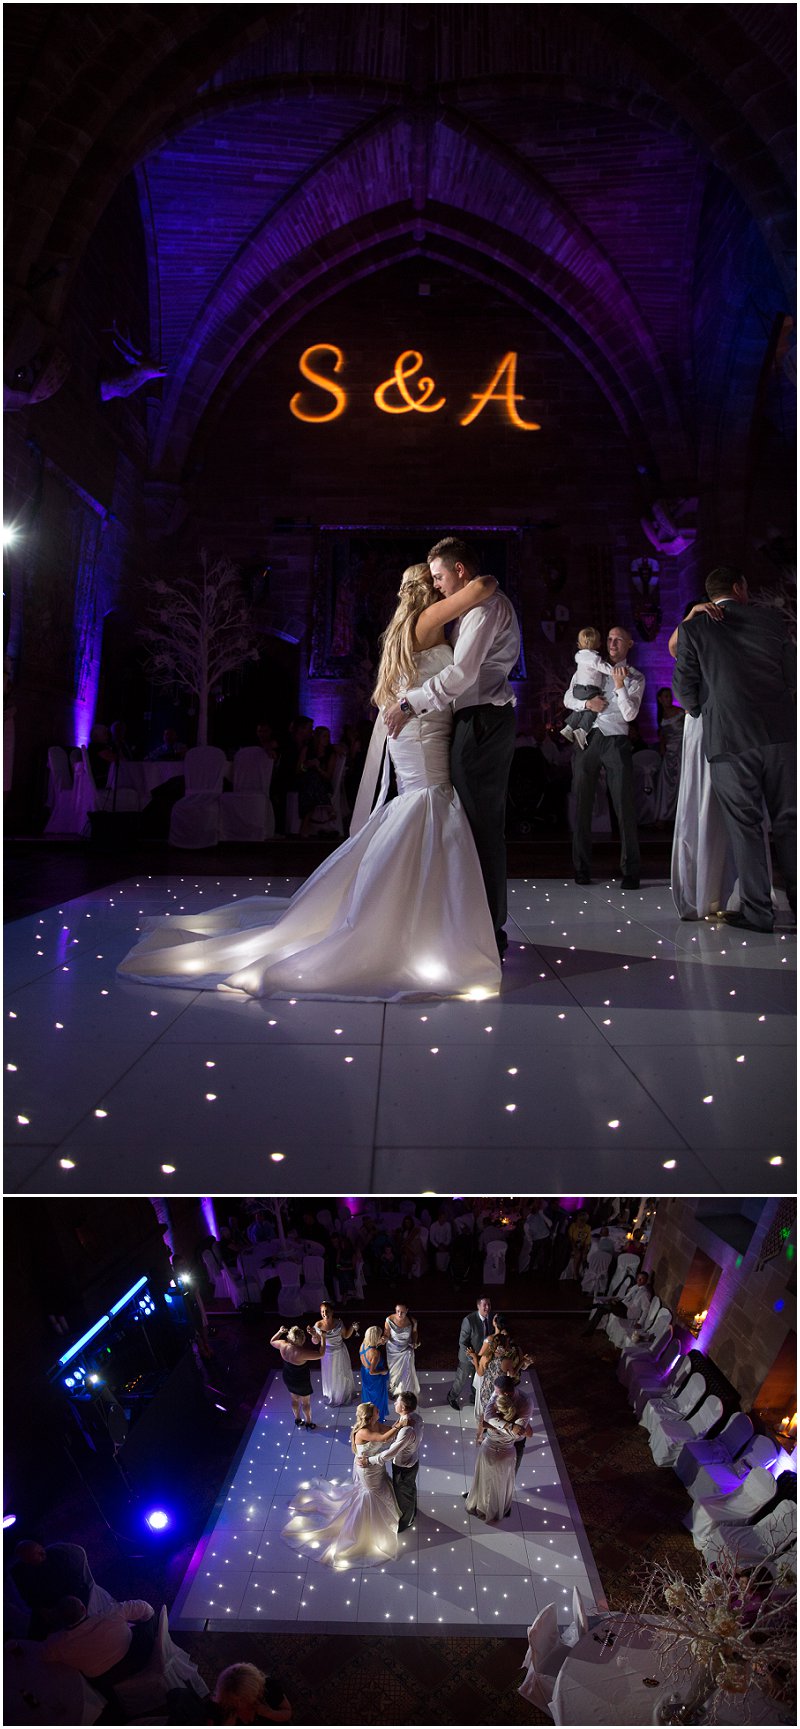 Bride and groom | Award Winning Wedding Photography Karli Harrison Photographer